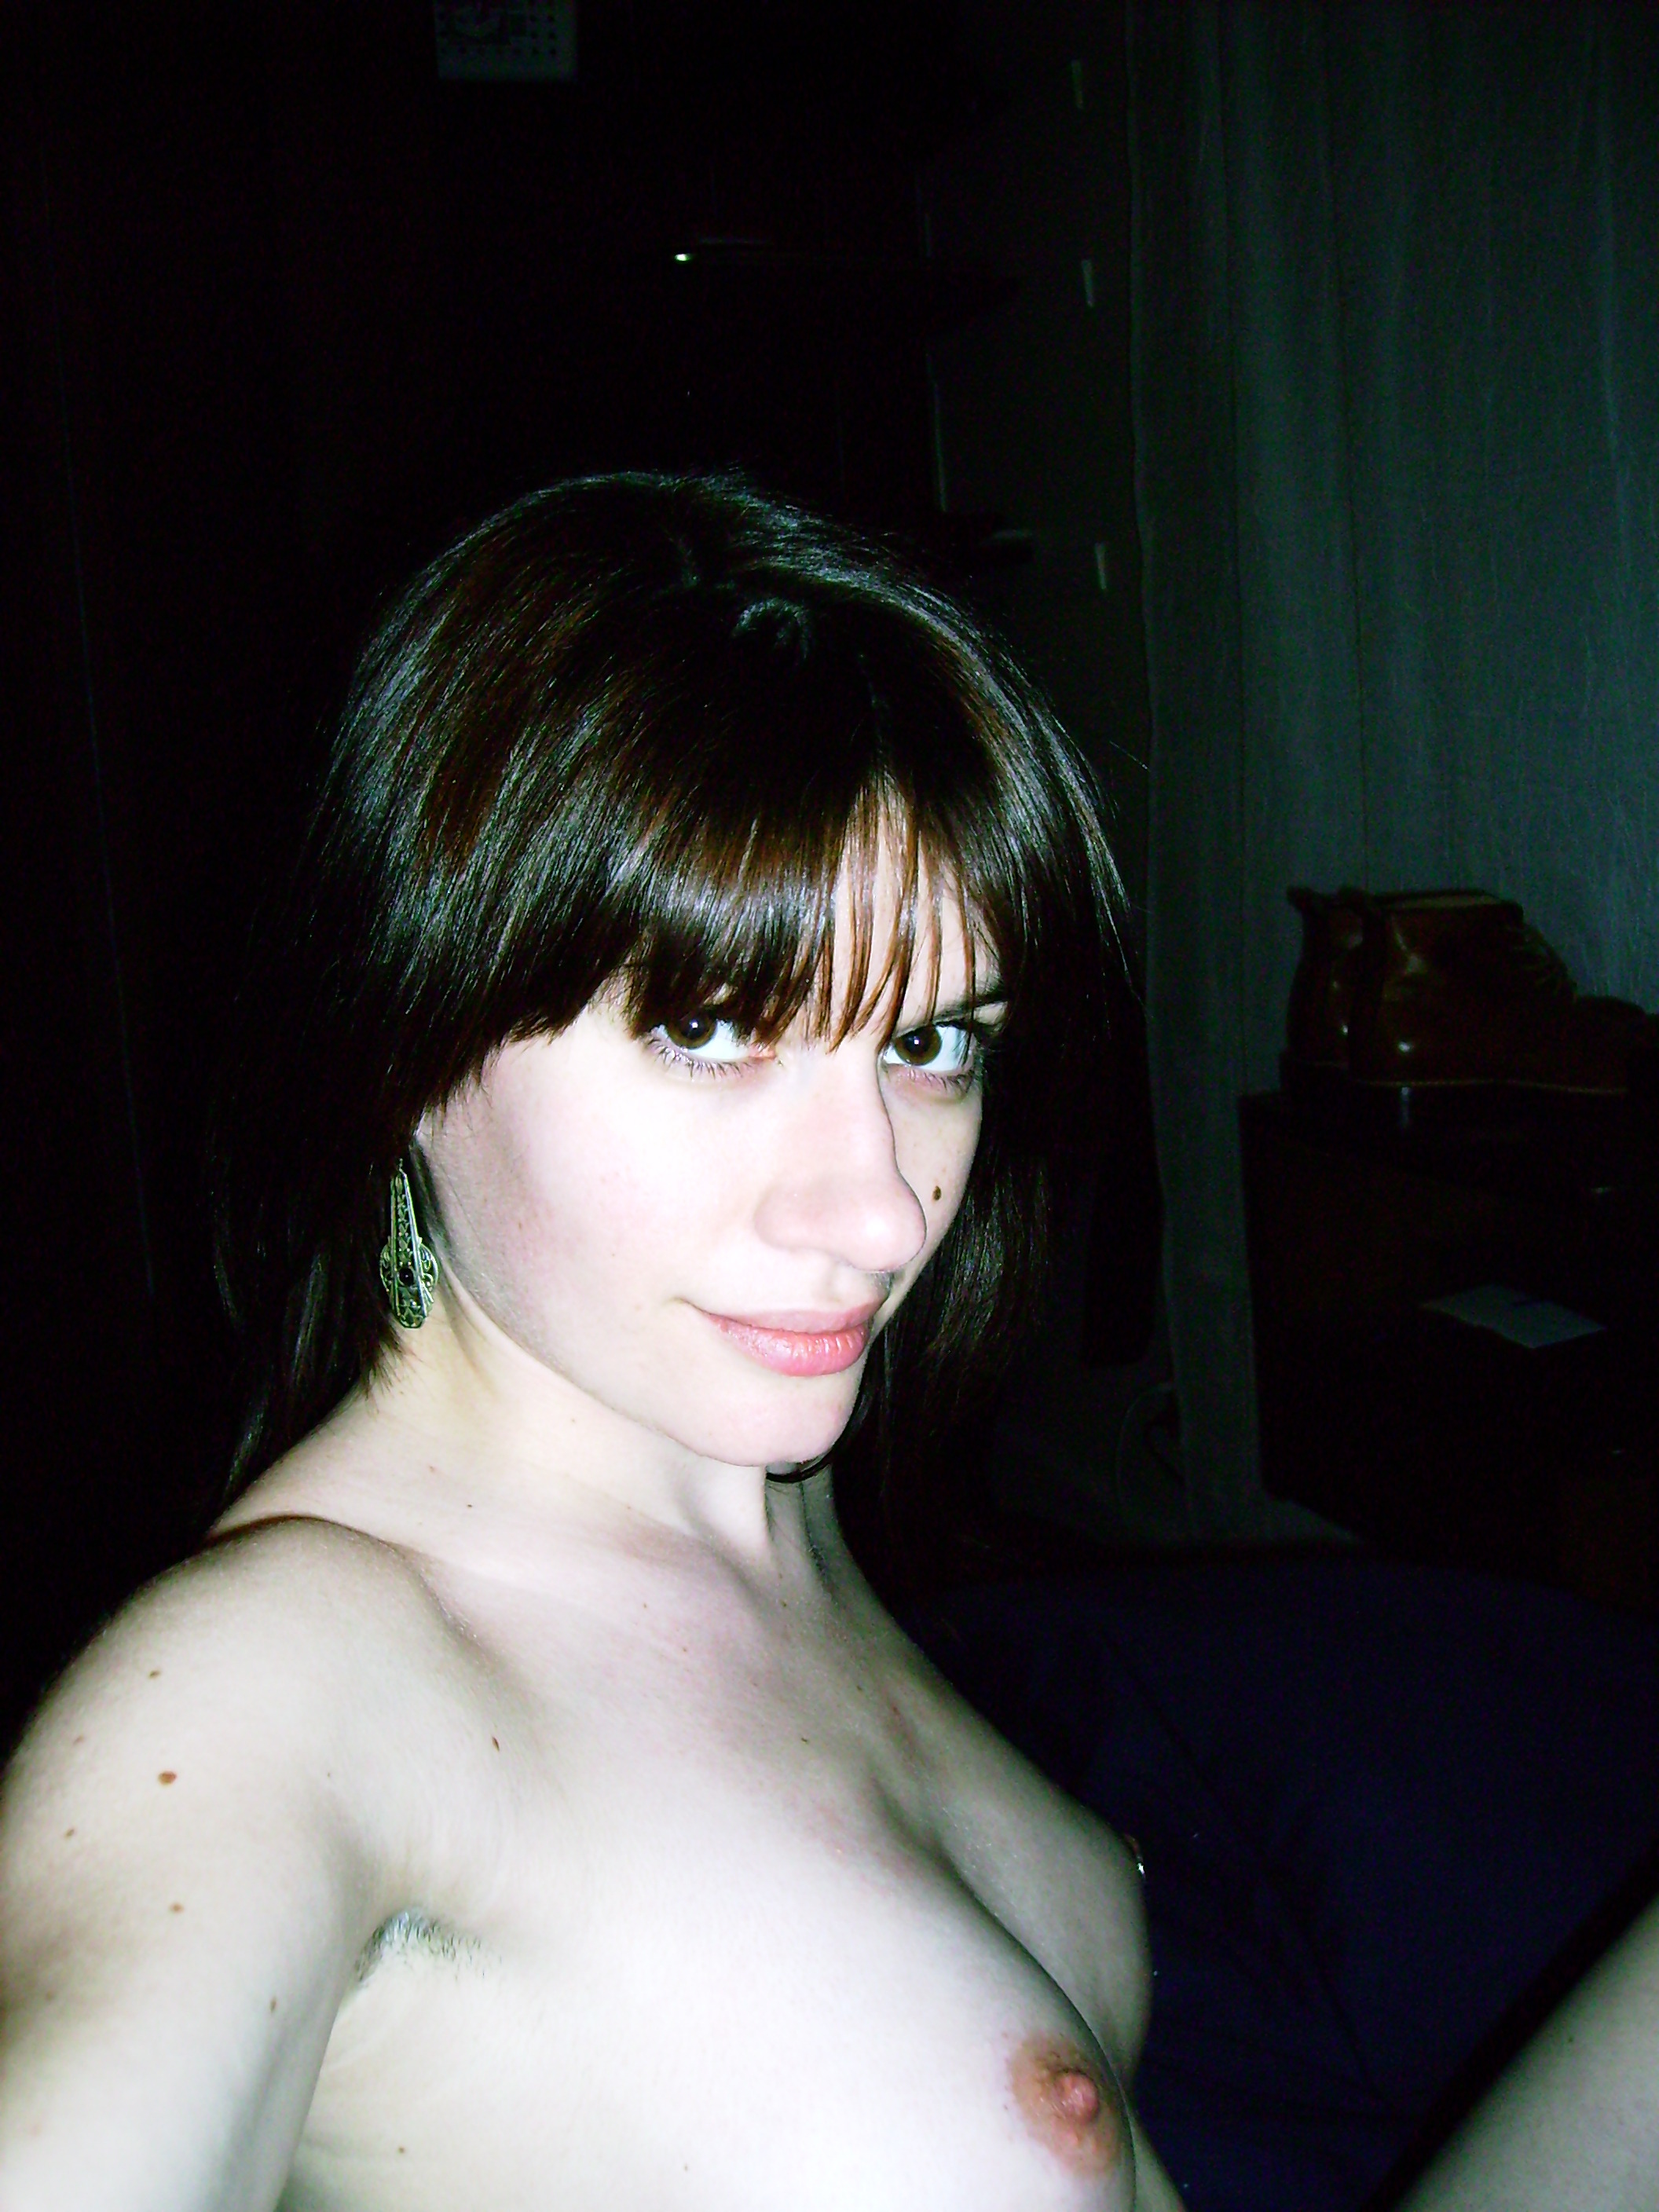 amateur-naked-woman-wonderful-body-nipple-piercing-16